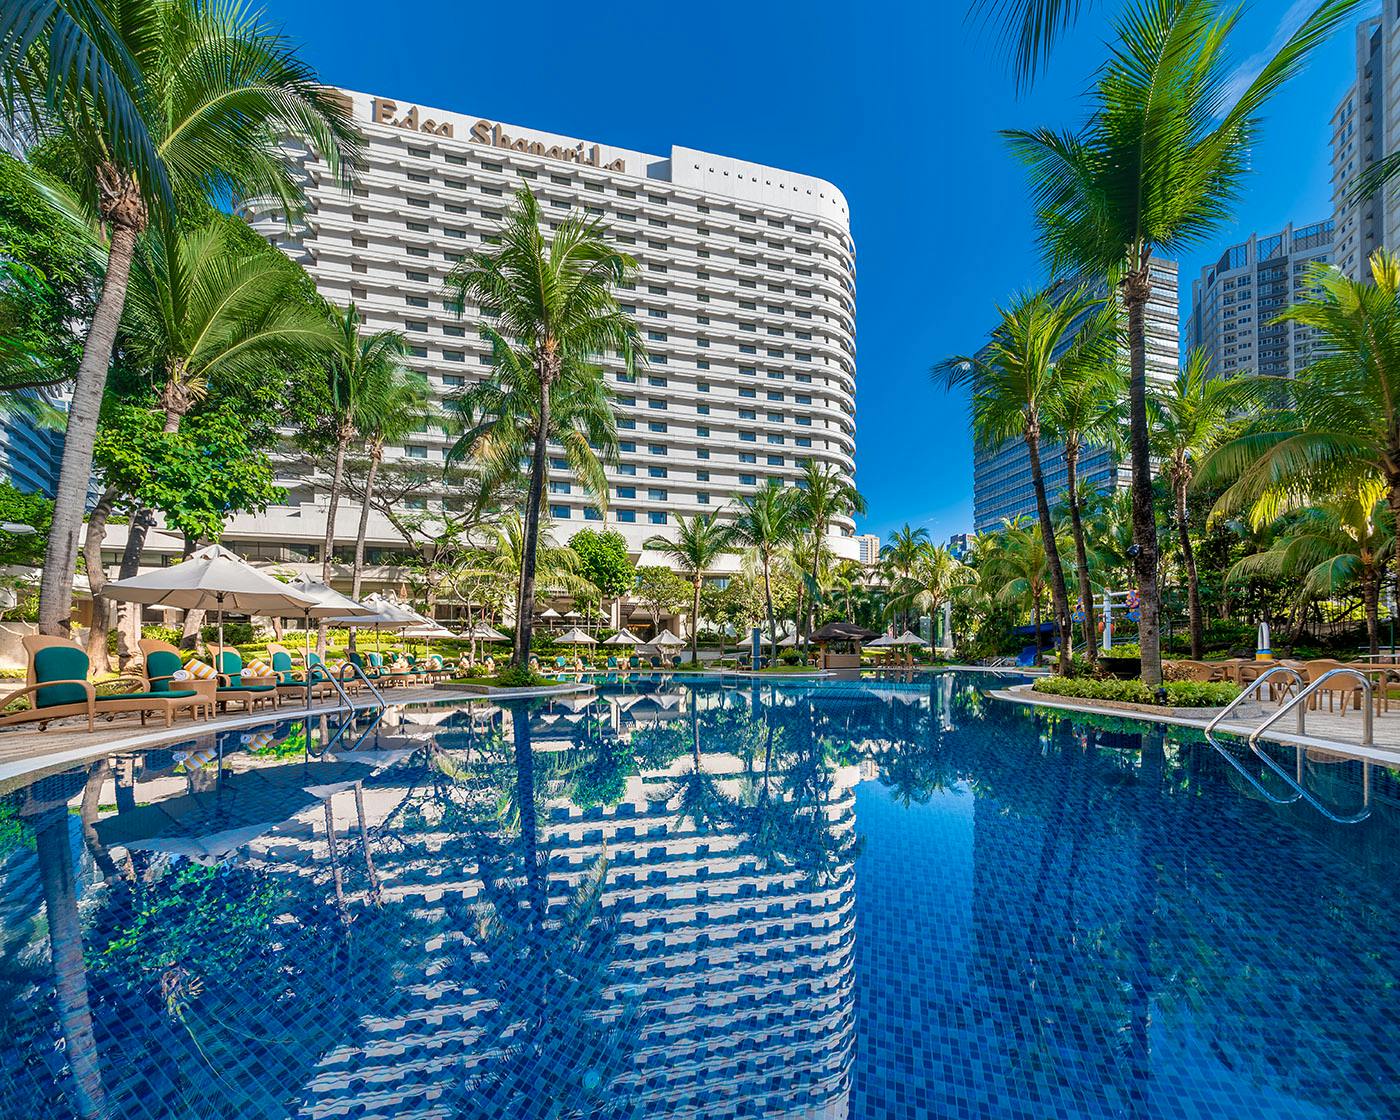 Beautiful view of the pool area at EDSA Shangri-la Hotel